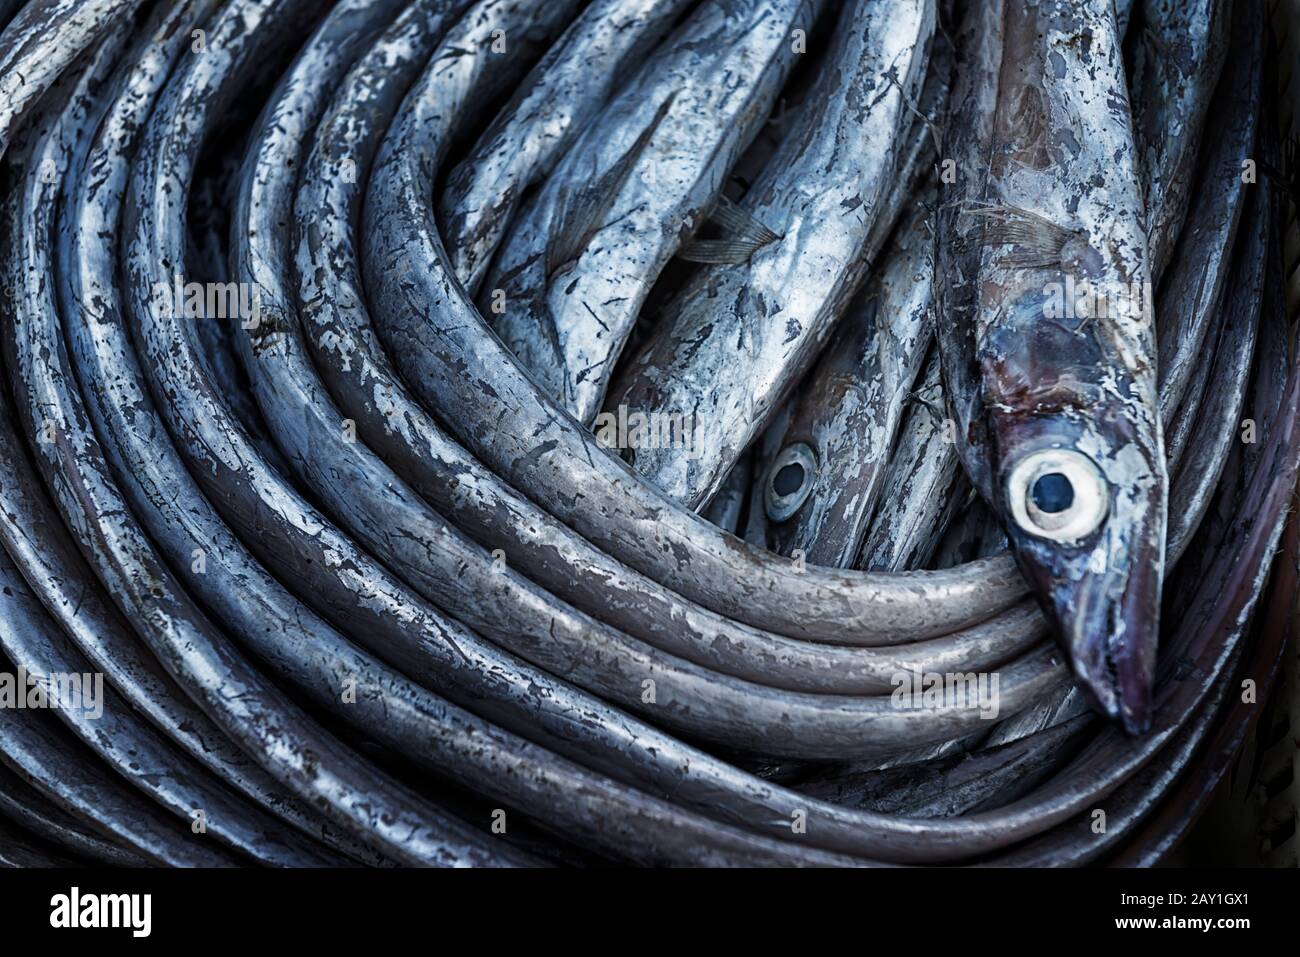 Eel fish. Food background image. Stock Photo